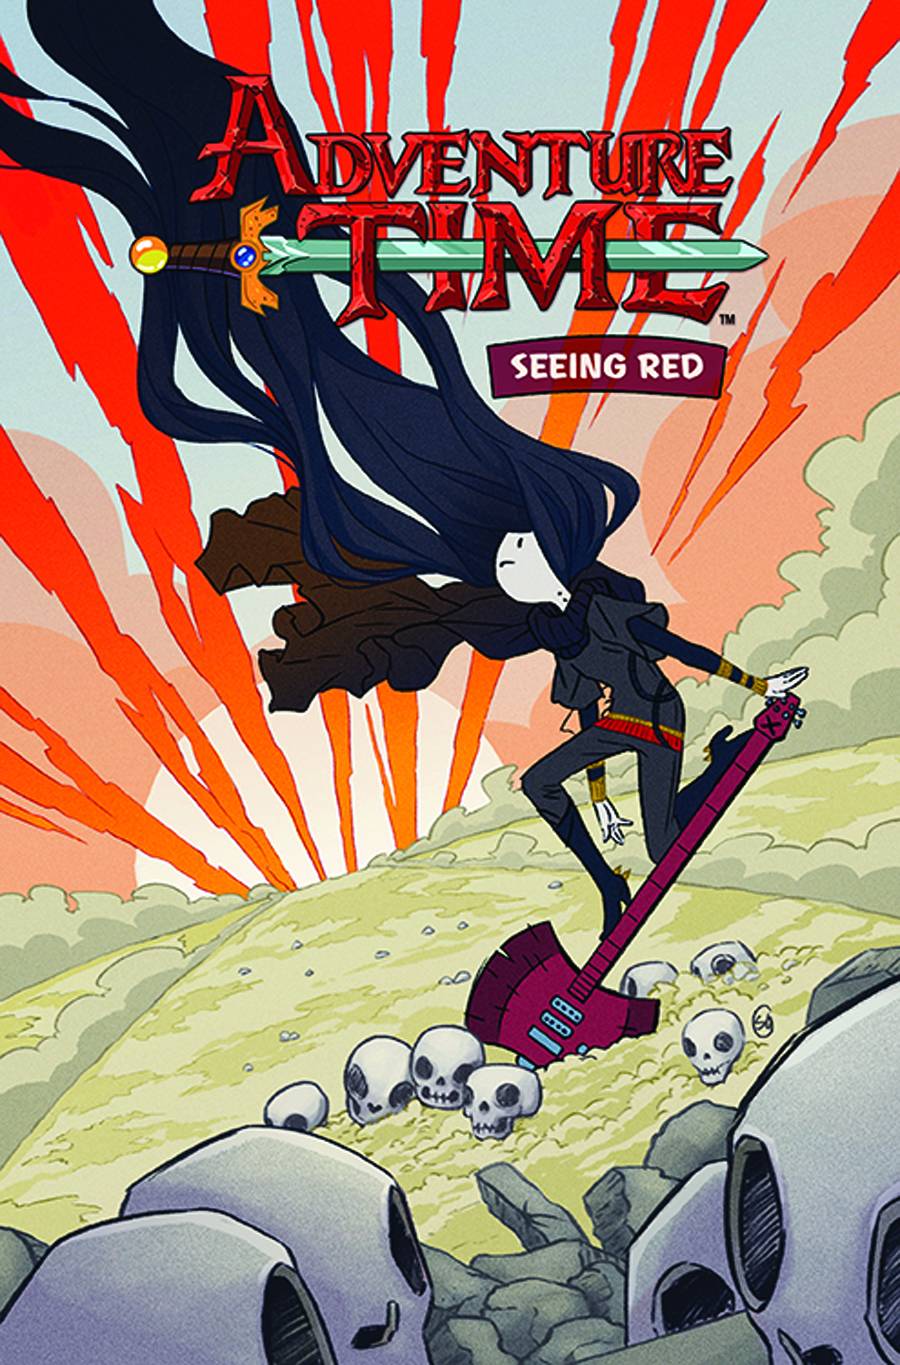 Adventure Time Original Graphic Novel Volume 3 Seeing Red